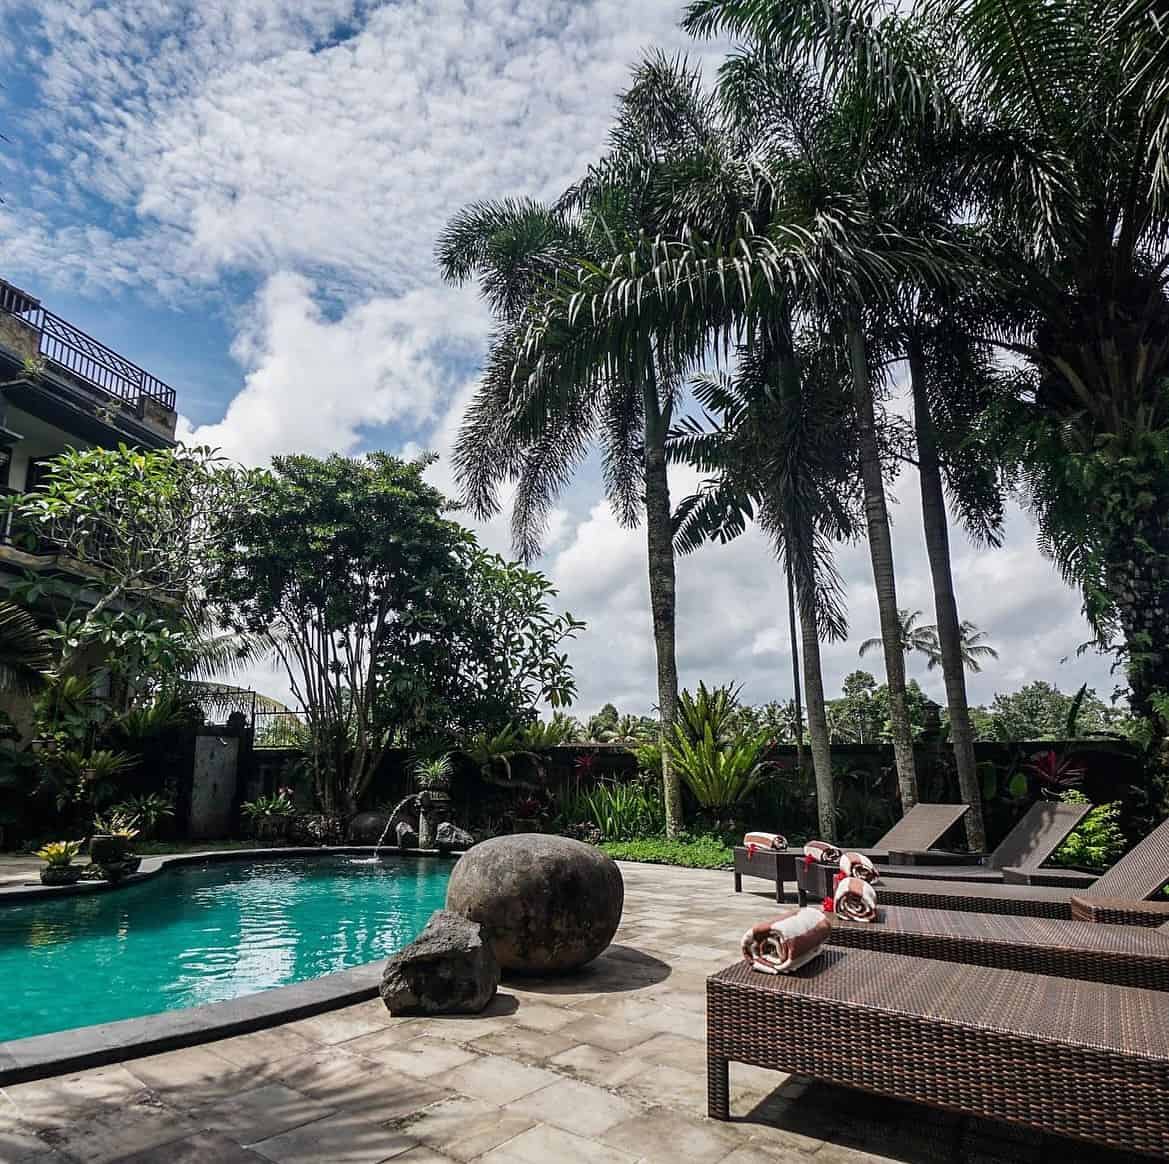 Relax at the Pool at the Uma Dana Ubud in Bali, Indonesia.